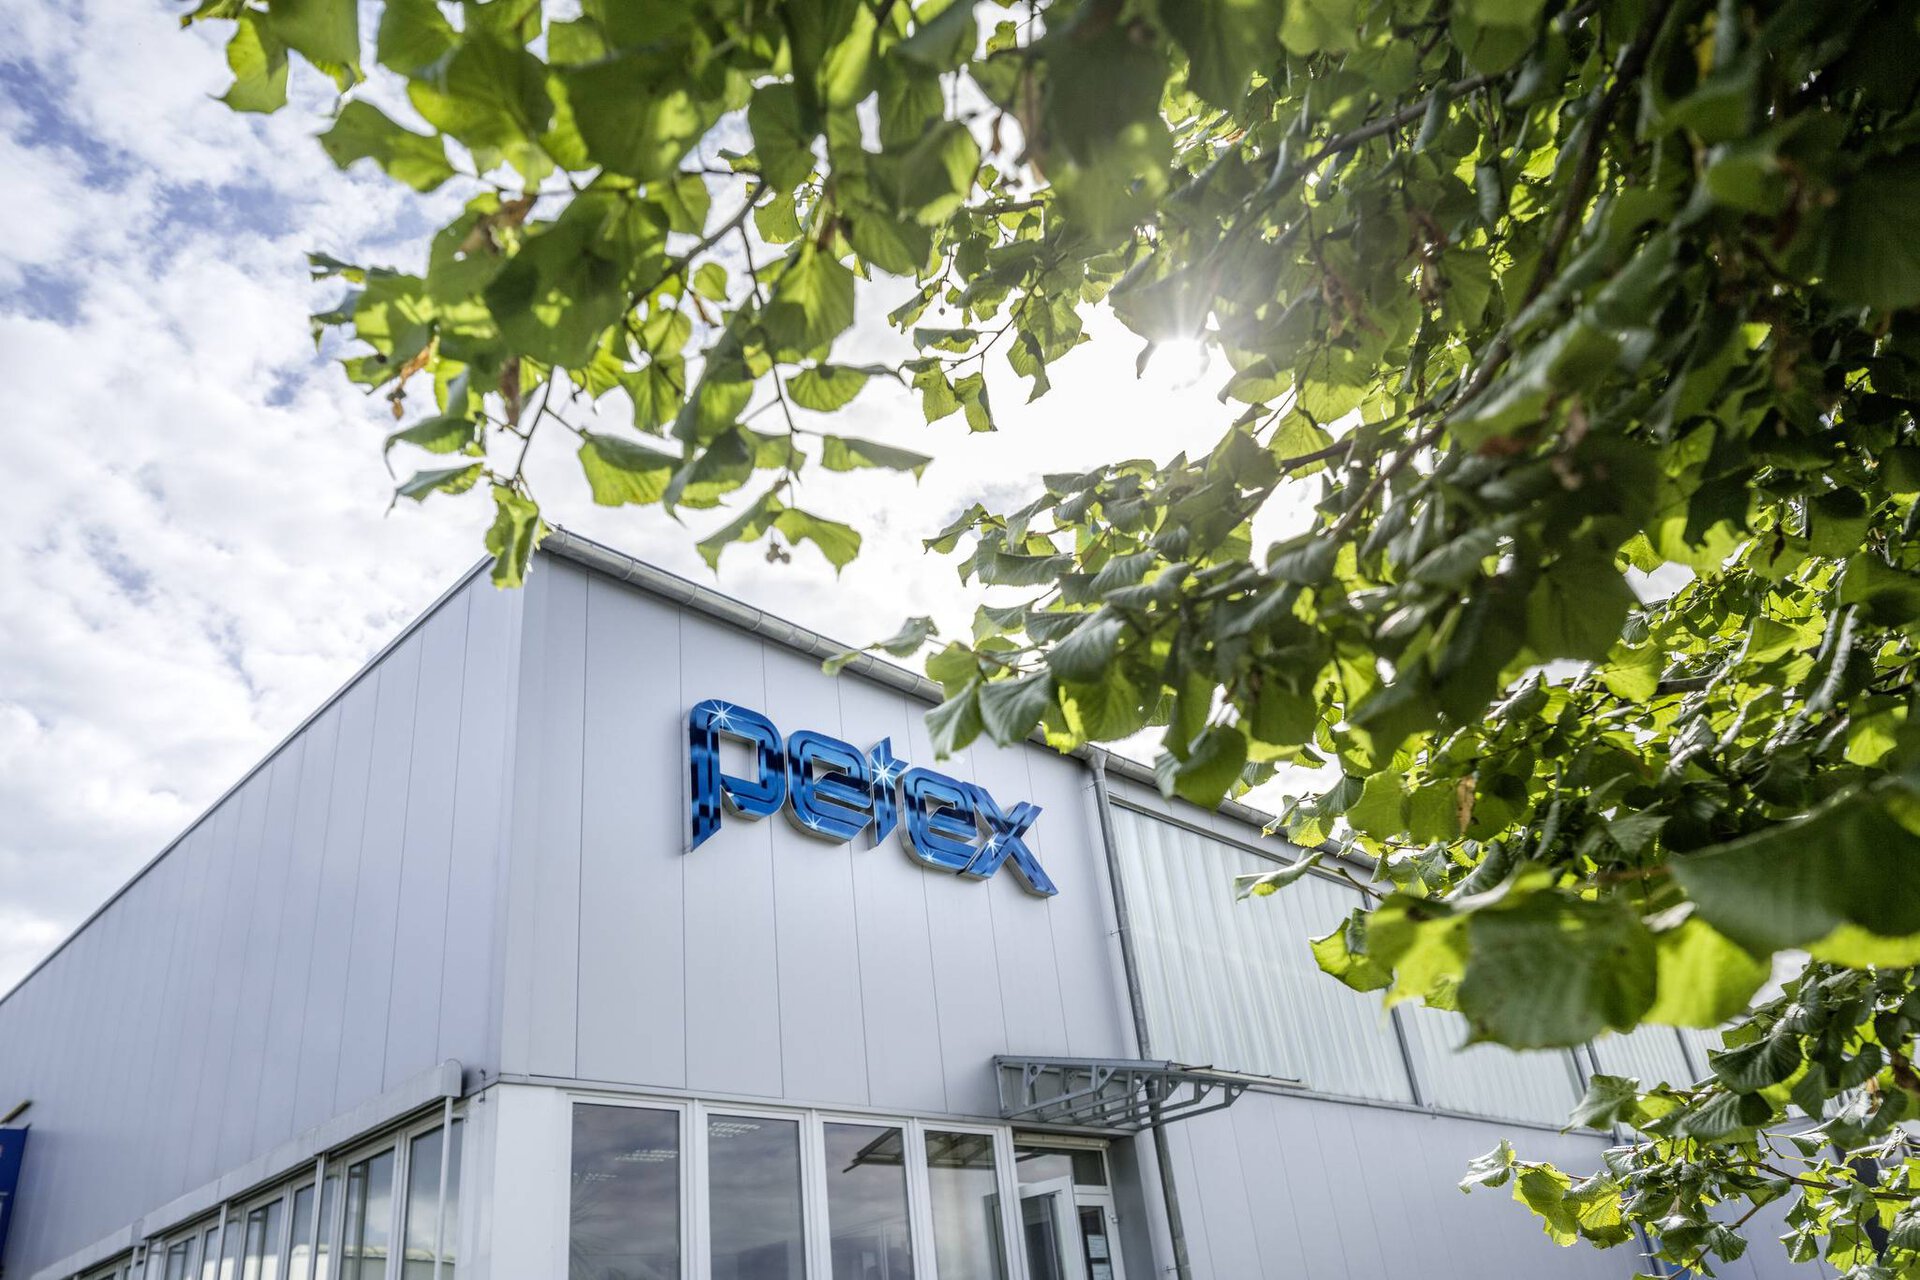 PETEX Autoausstattungs-GmbH